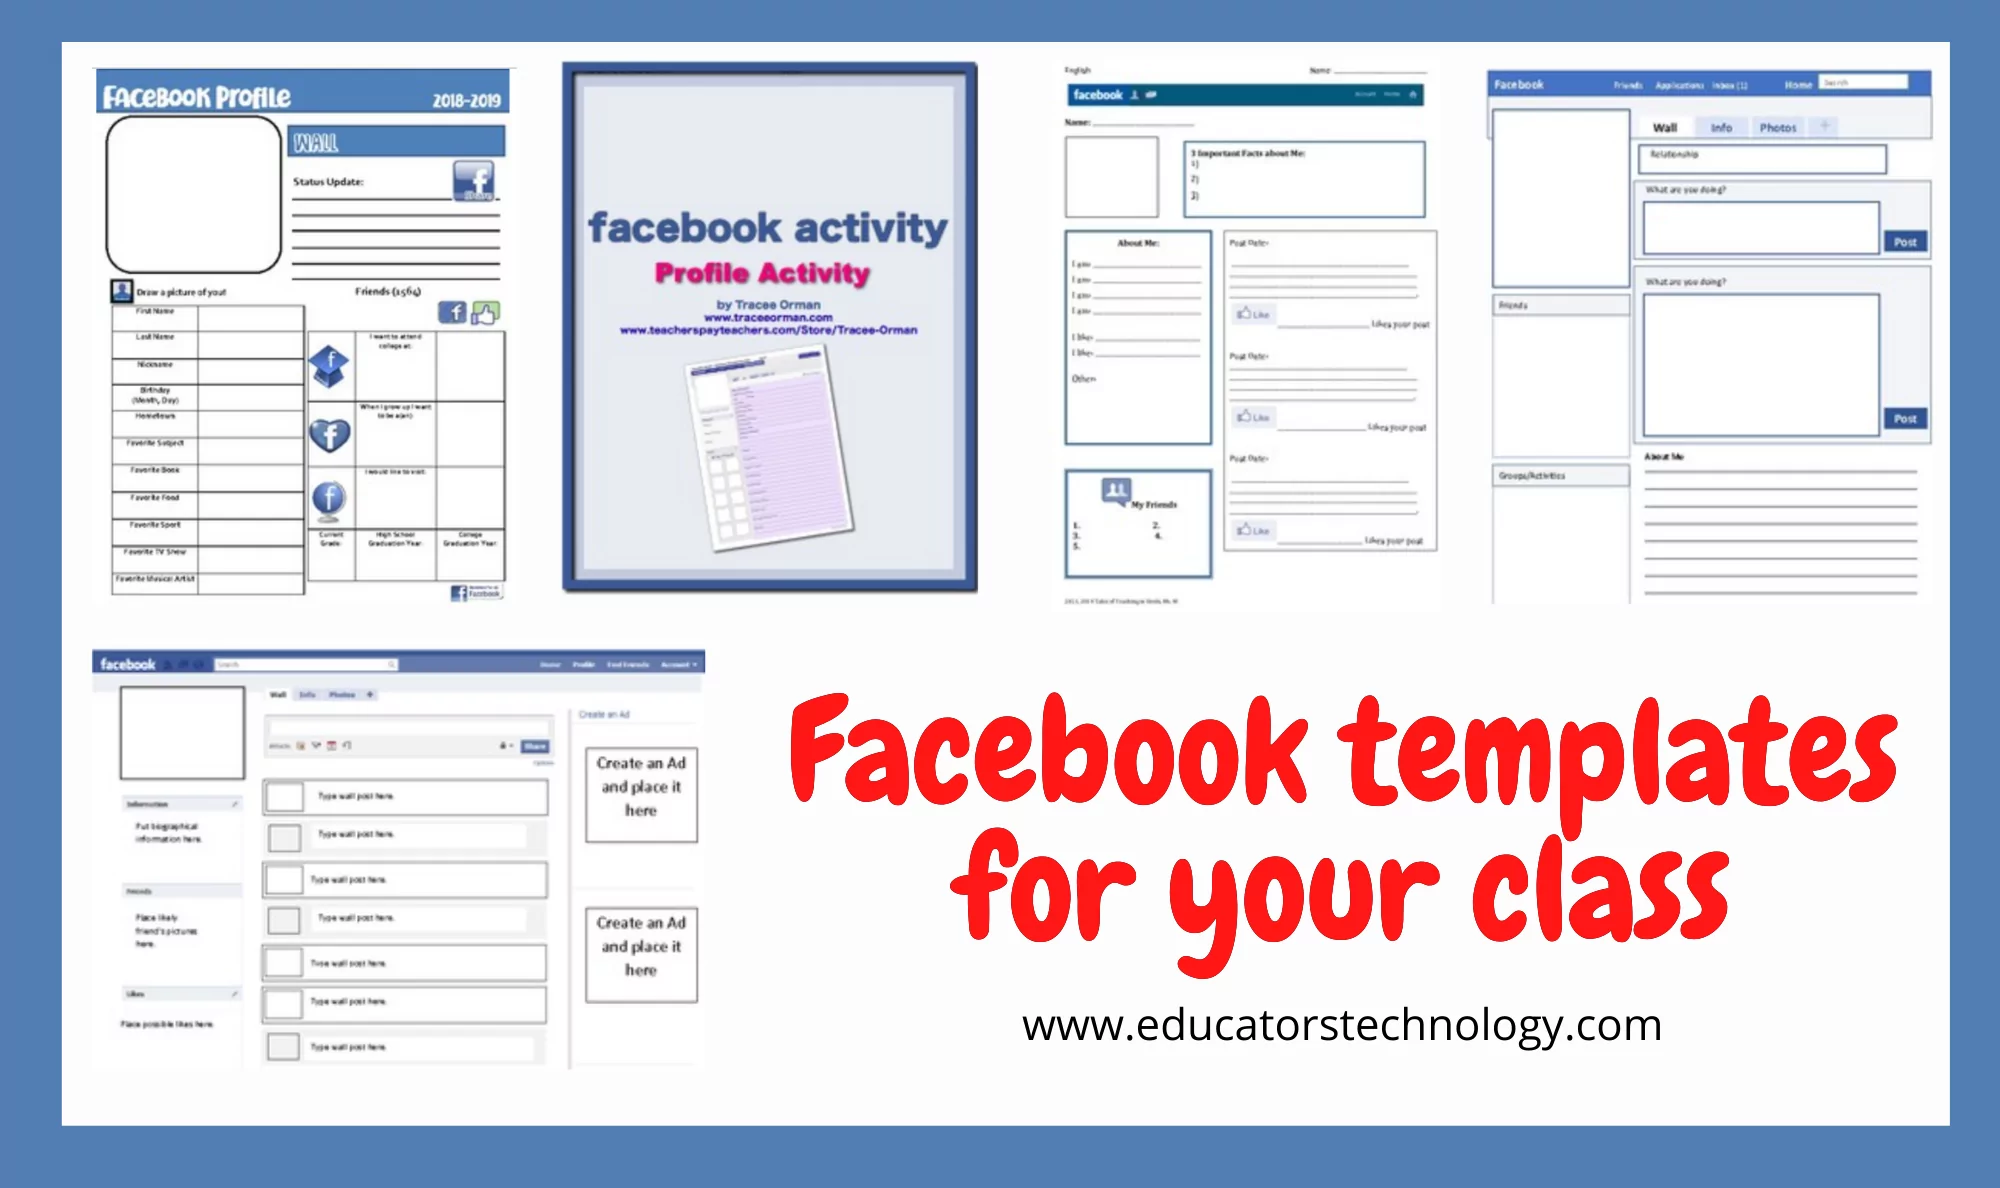 free-editable-facebook-profile-templates-educators-technology